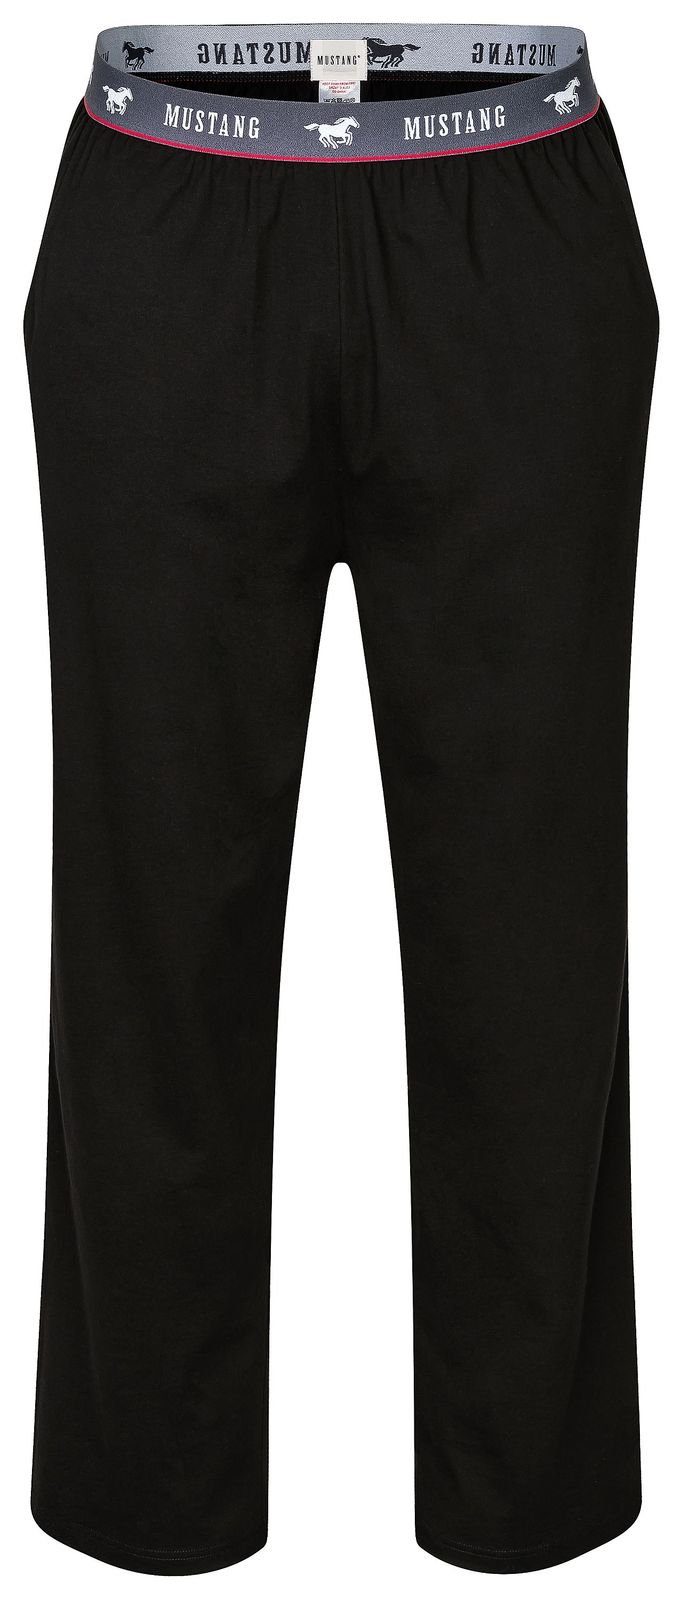 MUSTANG Loungepants Long Pants Lounge Hose Trousers Freizeithose roter Kontraststreifen und Mustangbranding schwarz | Jerseyhosen